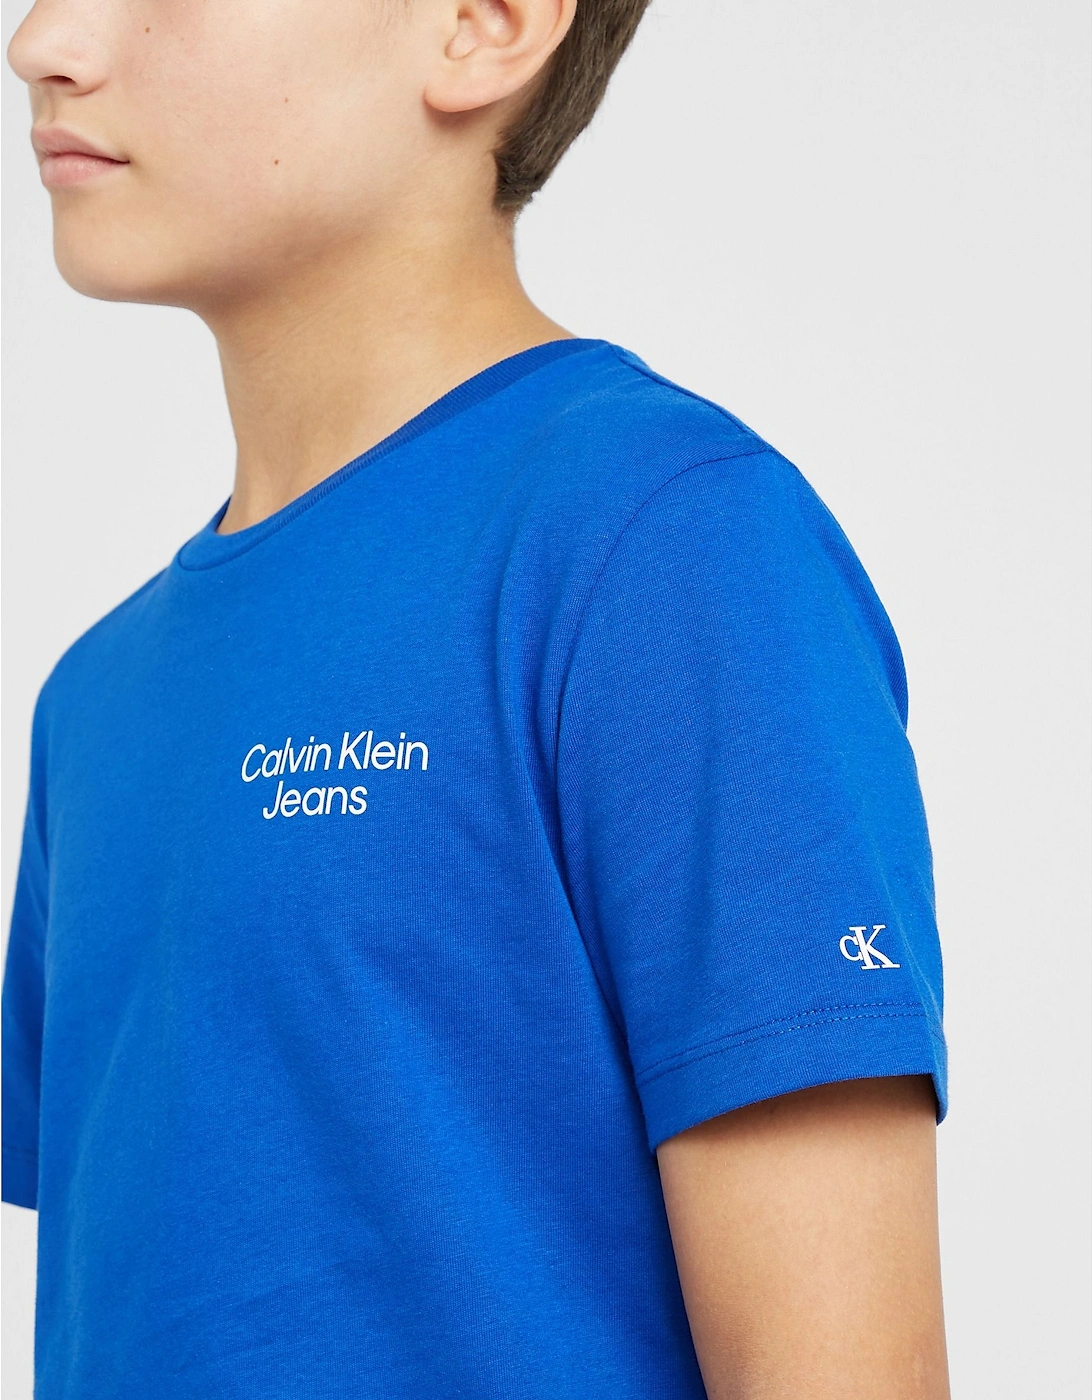 Juniors Boys Stacked Logo T-Shirt